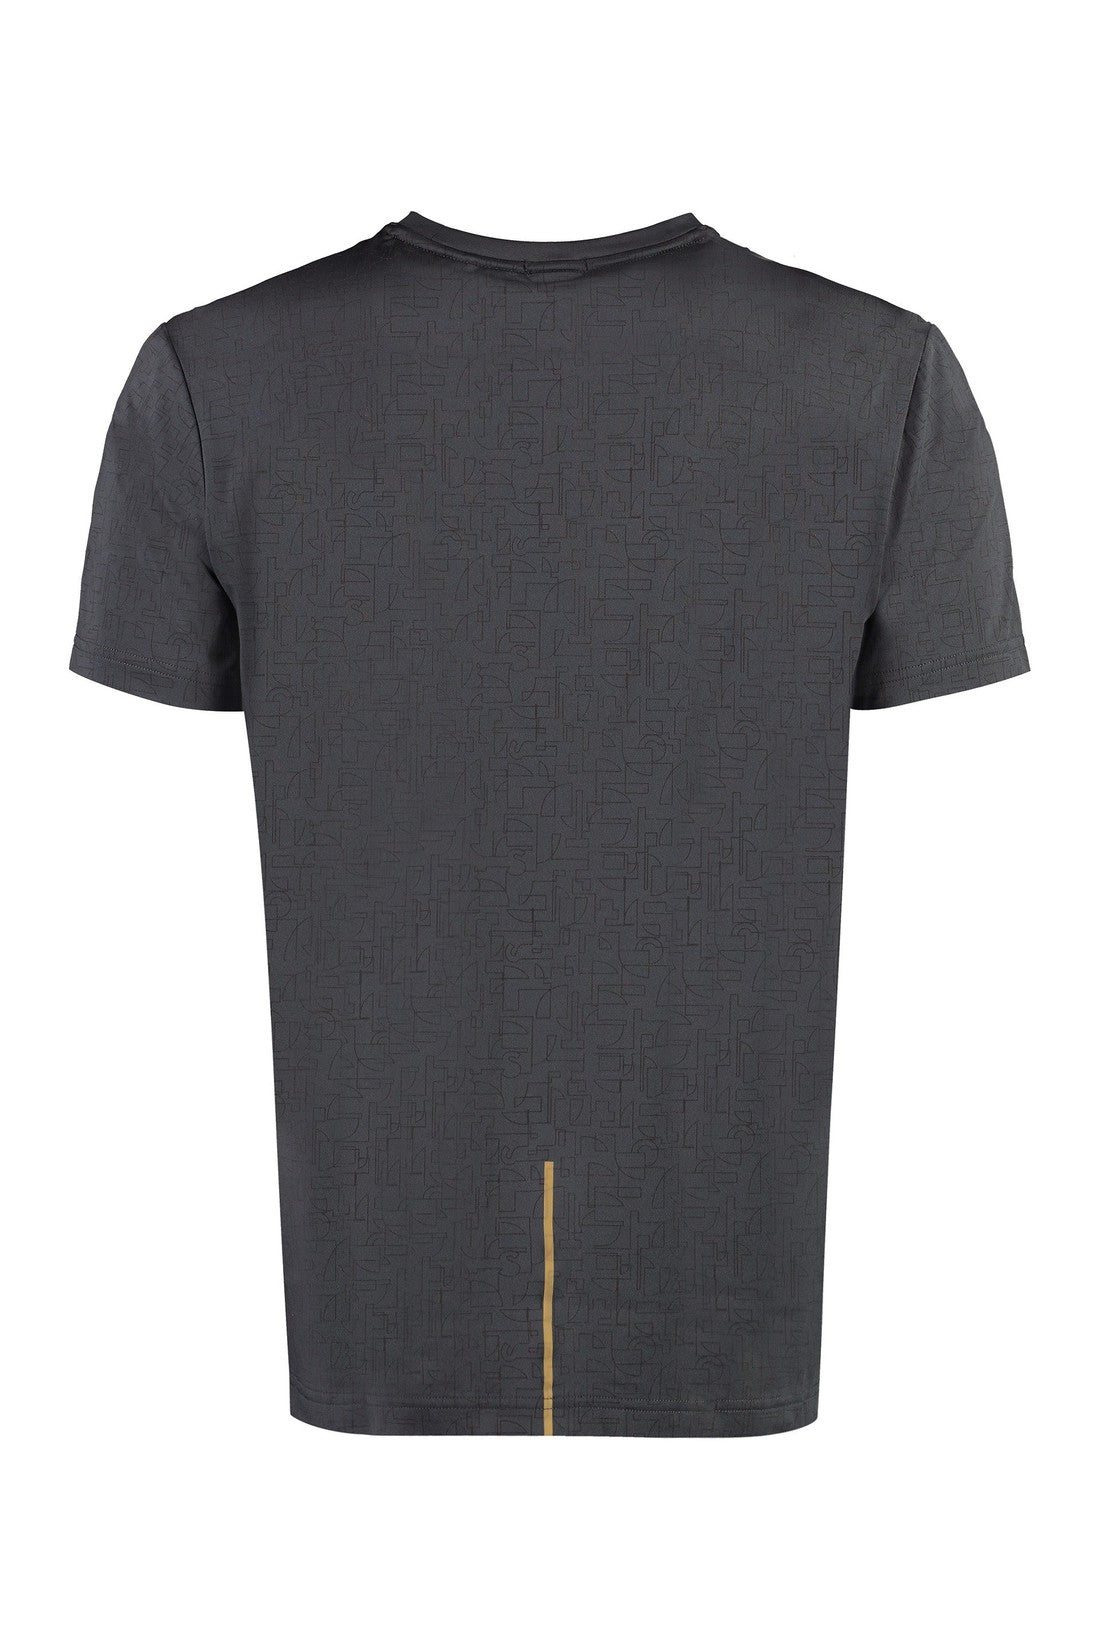 BOSS-OUTLET-SALE-Techno fabric t-shirt-ARCHIVIST